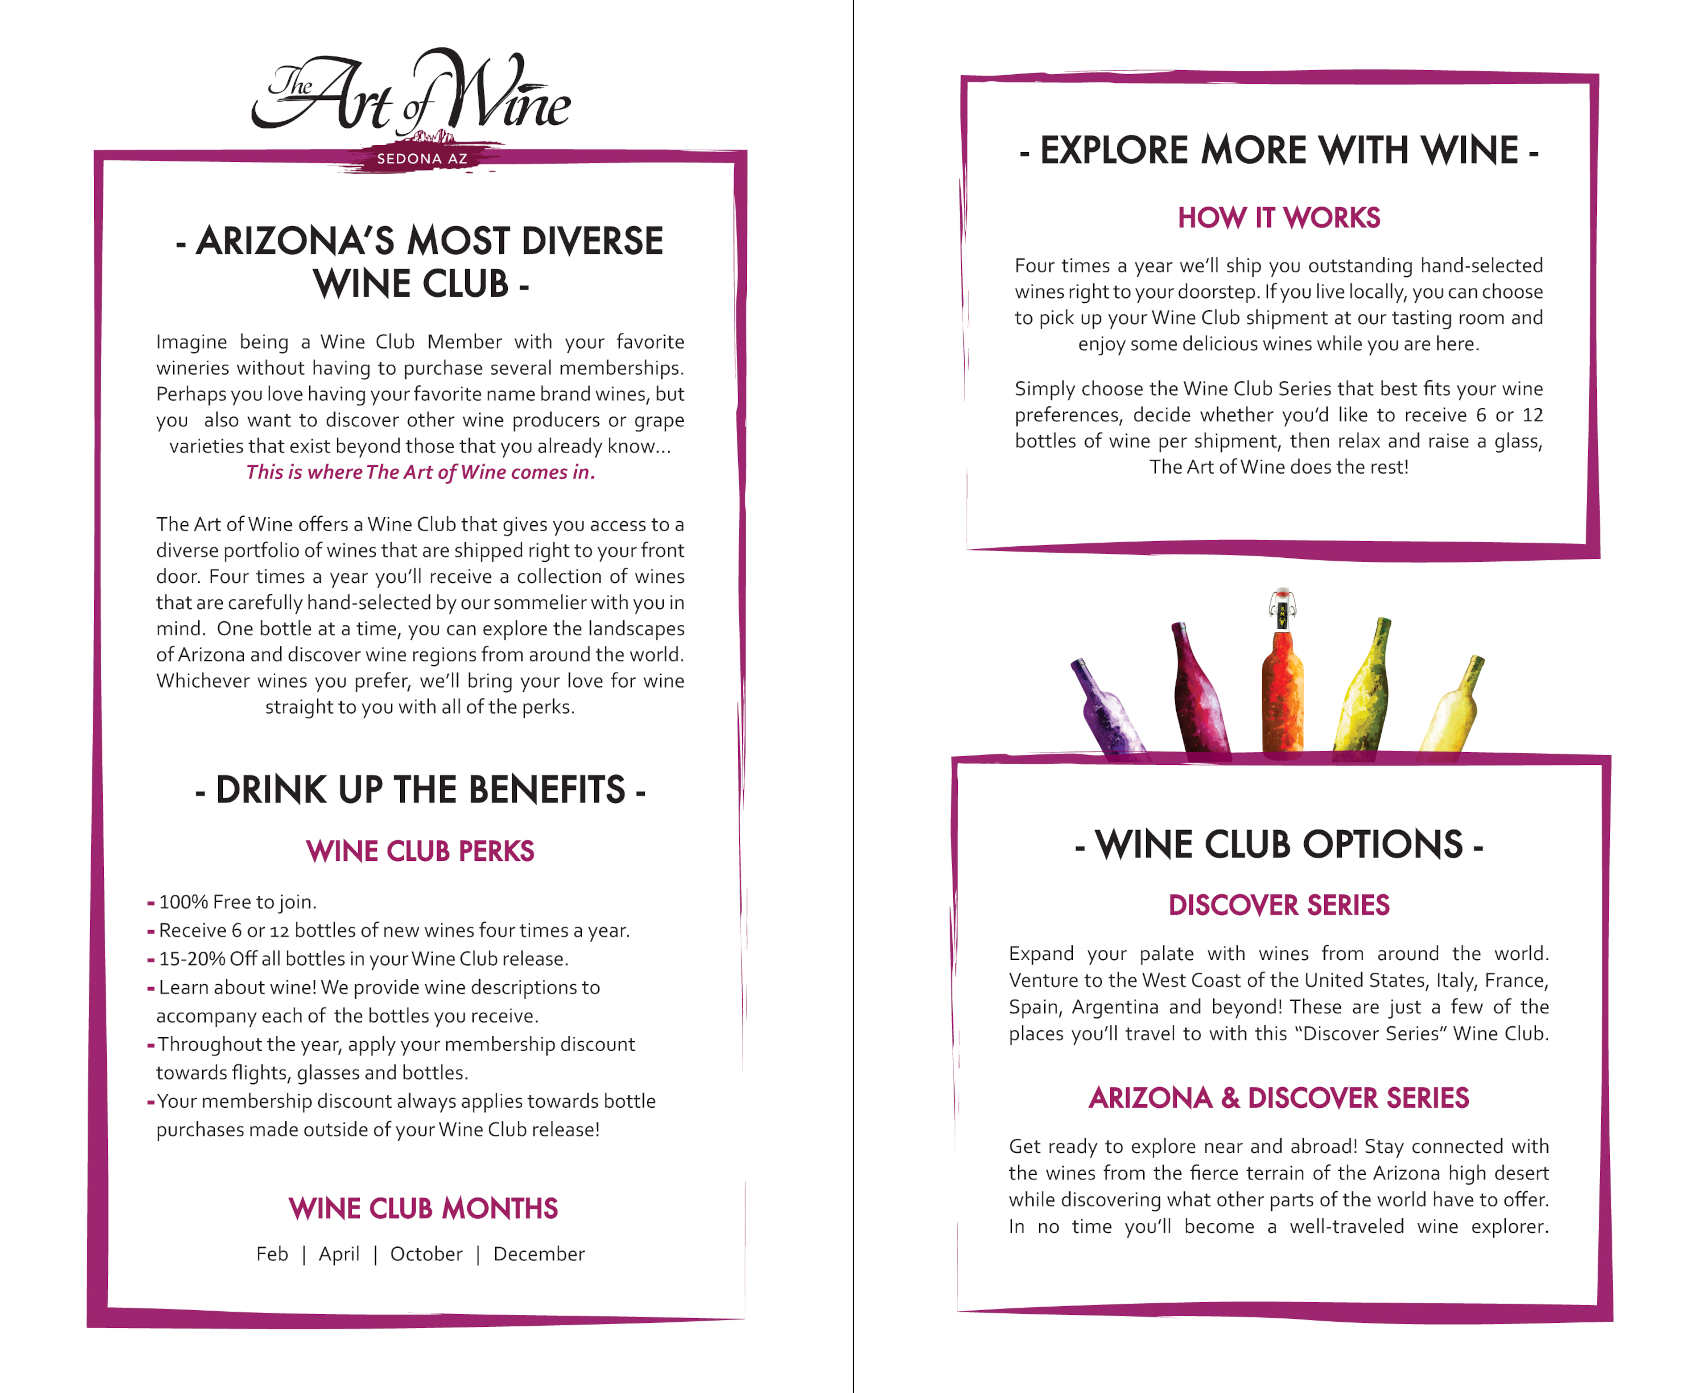 The art of wine info